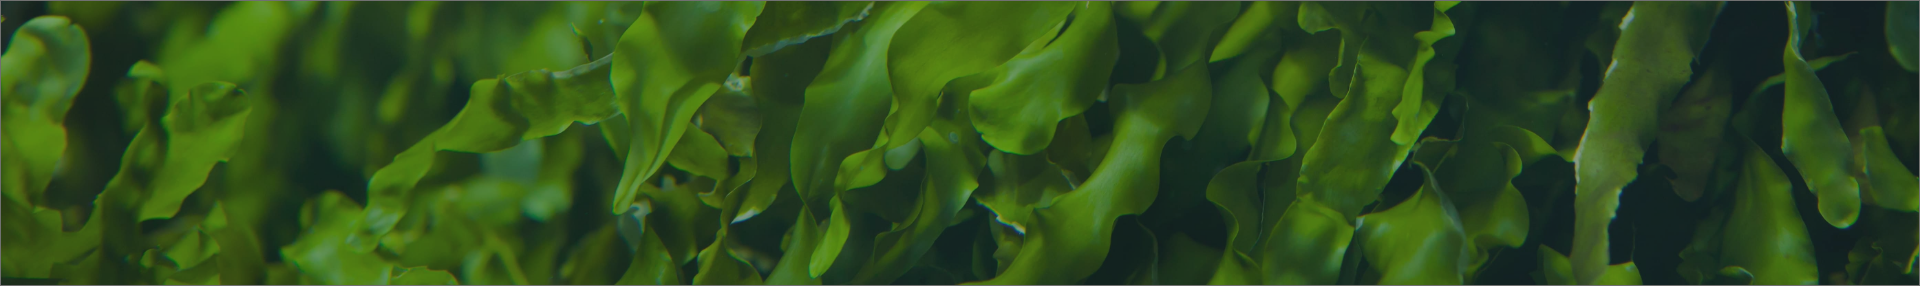 Image of seaweeds